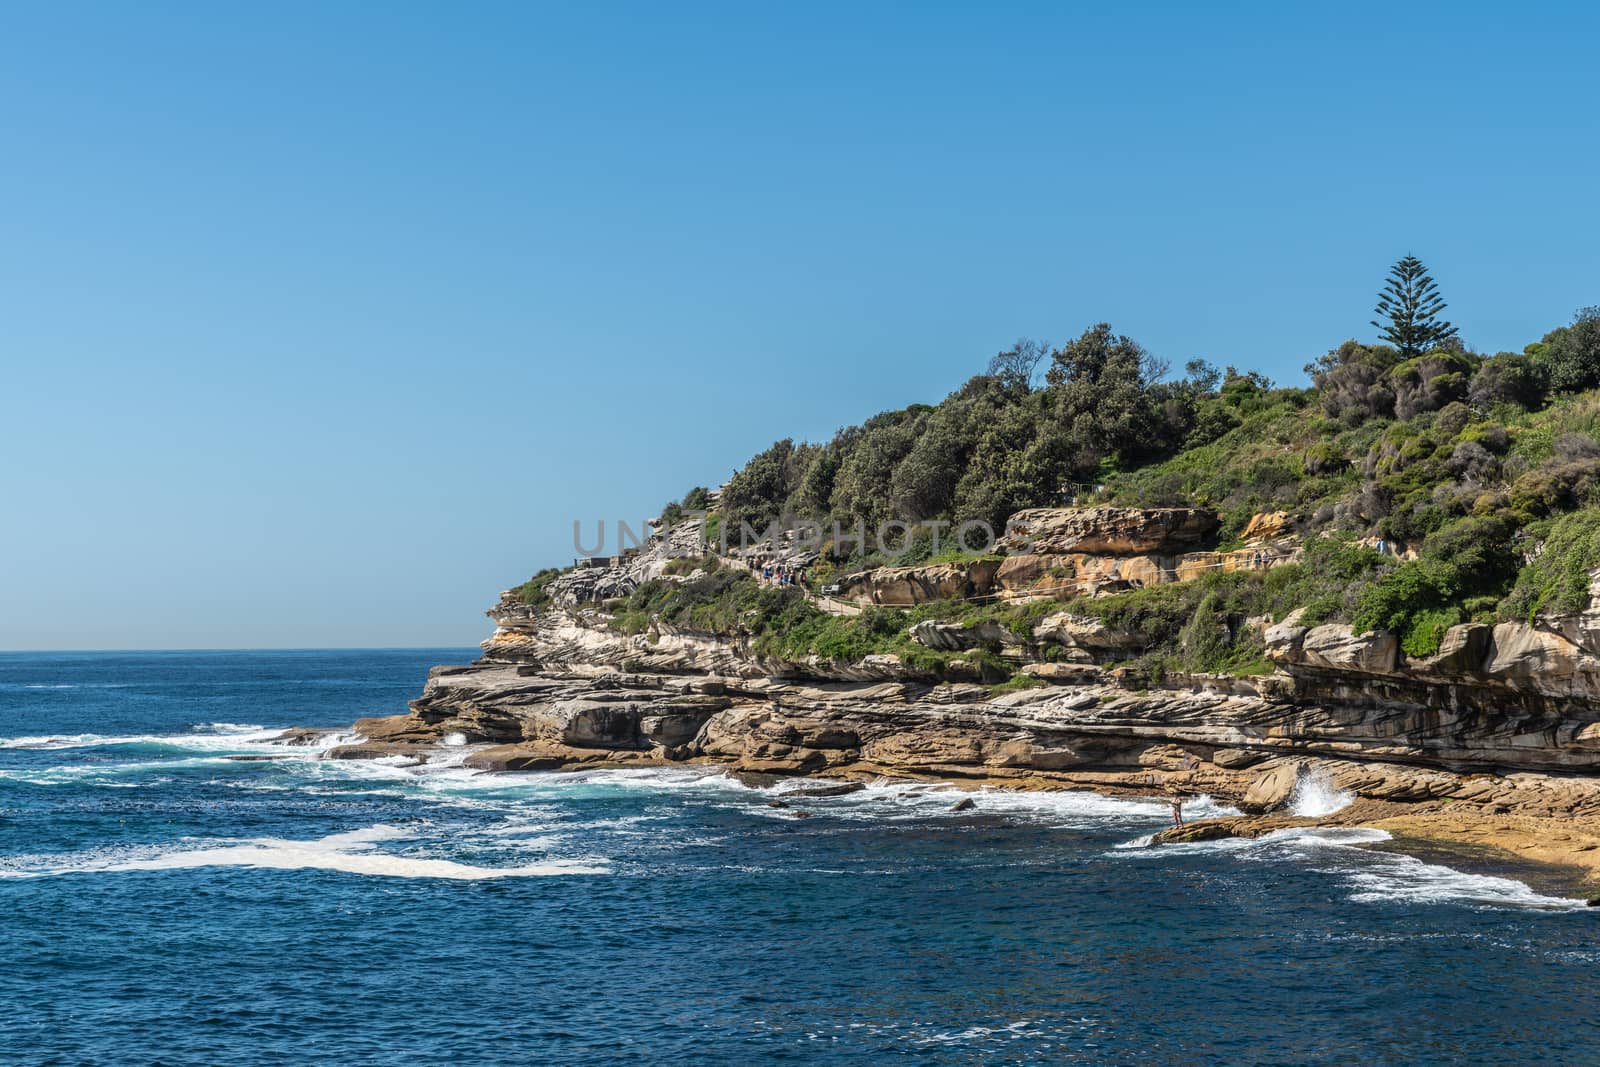 South shore rocks at Bondi beach, Sydney Australia. by Claudine